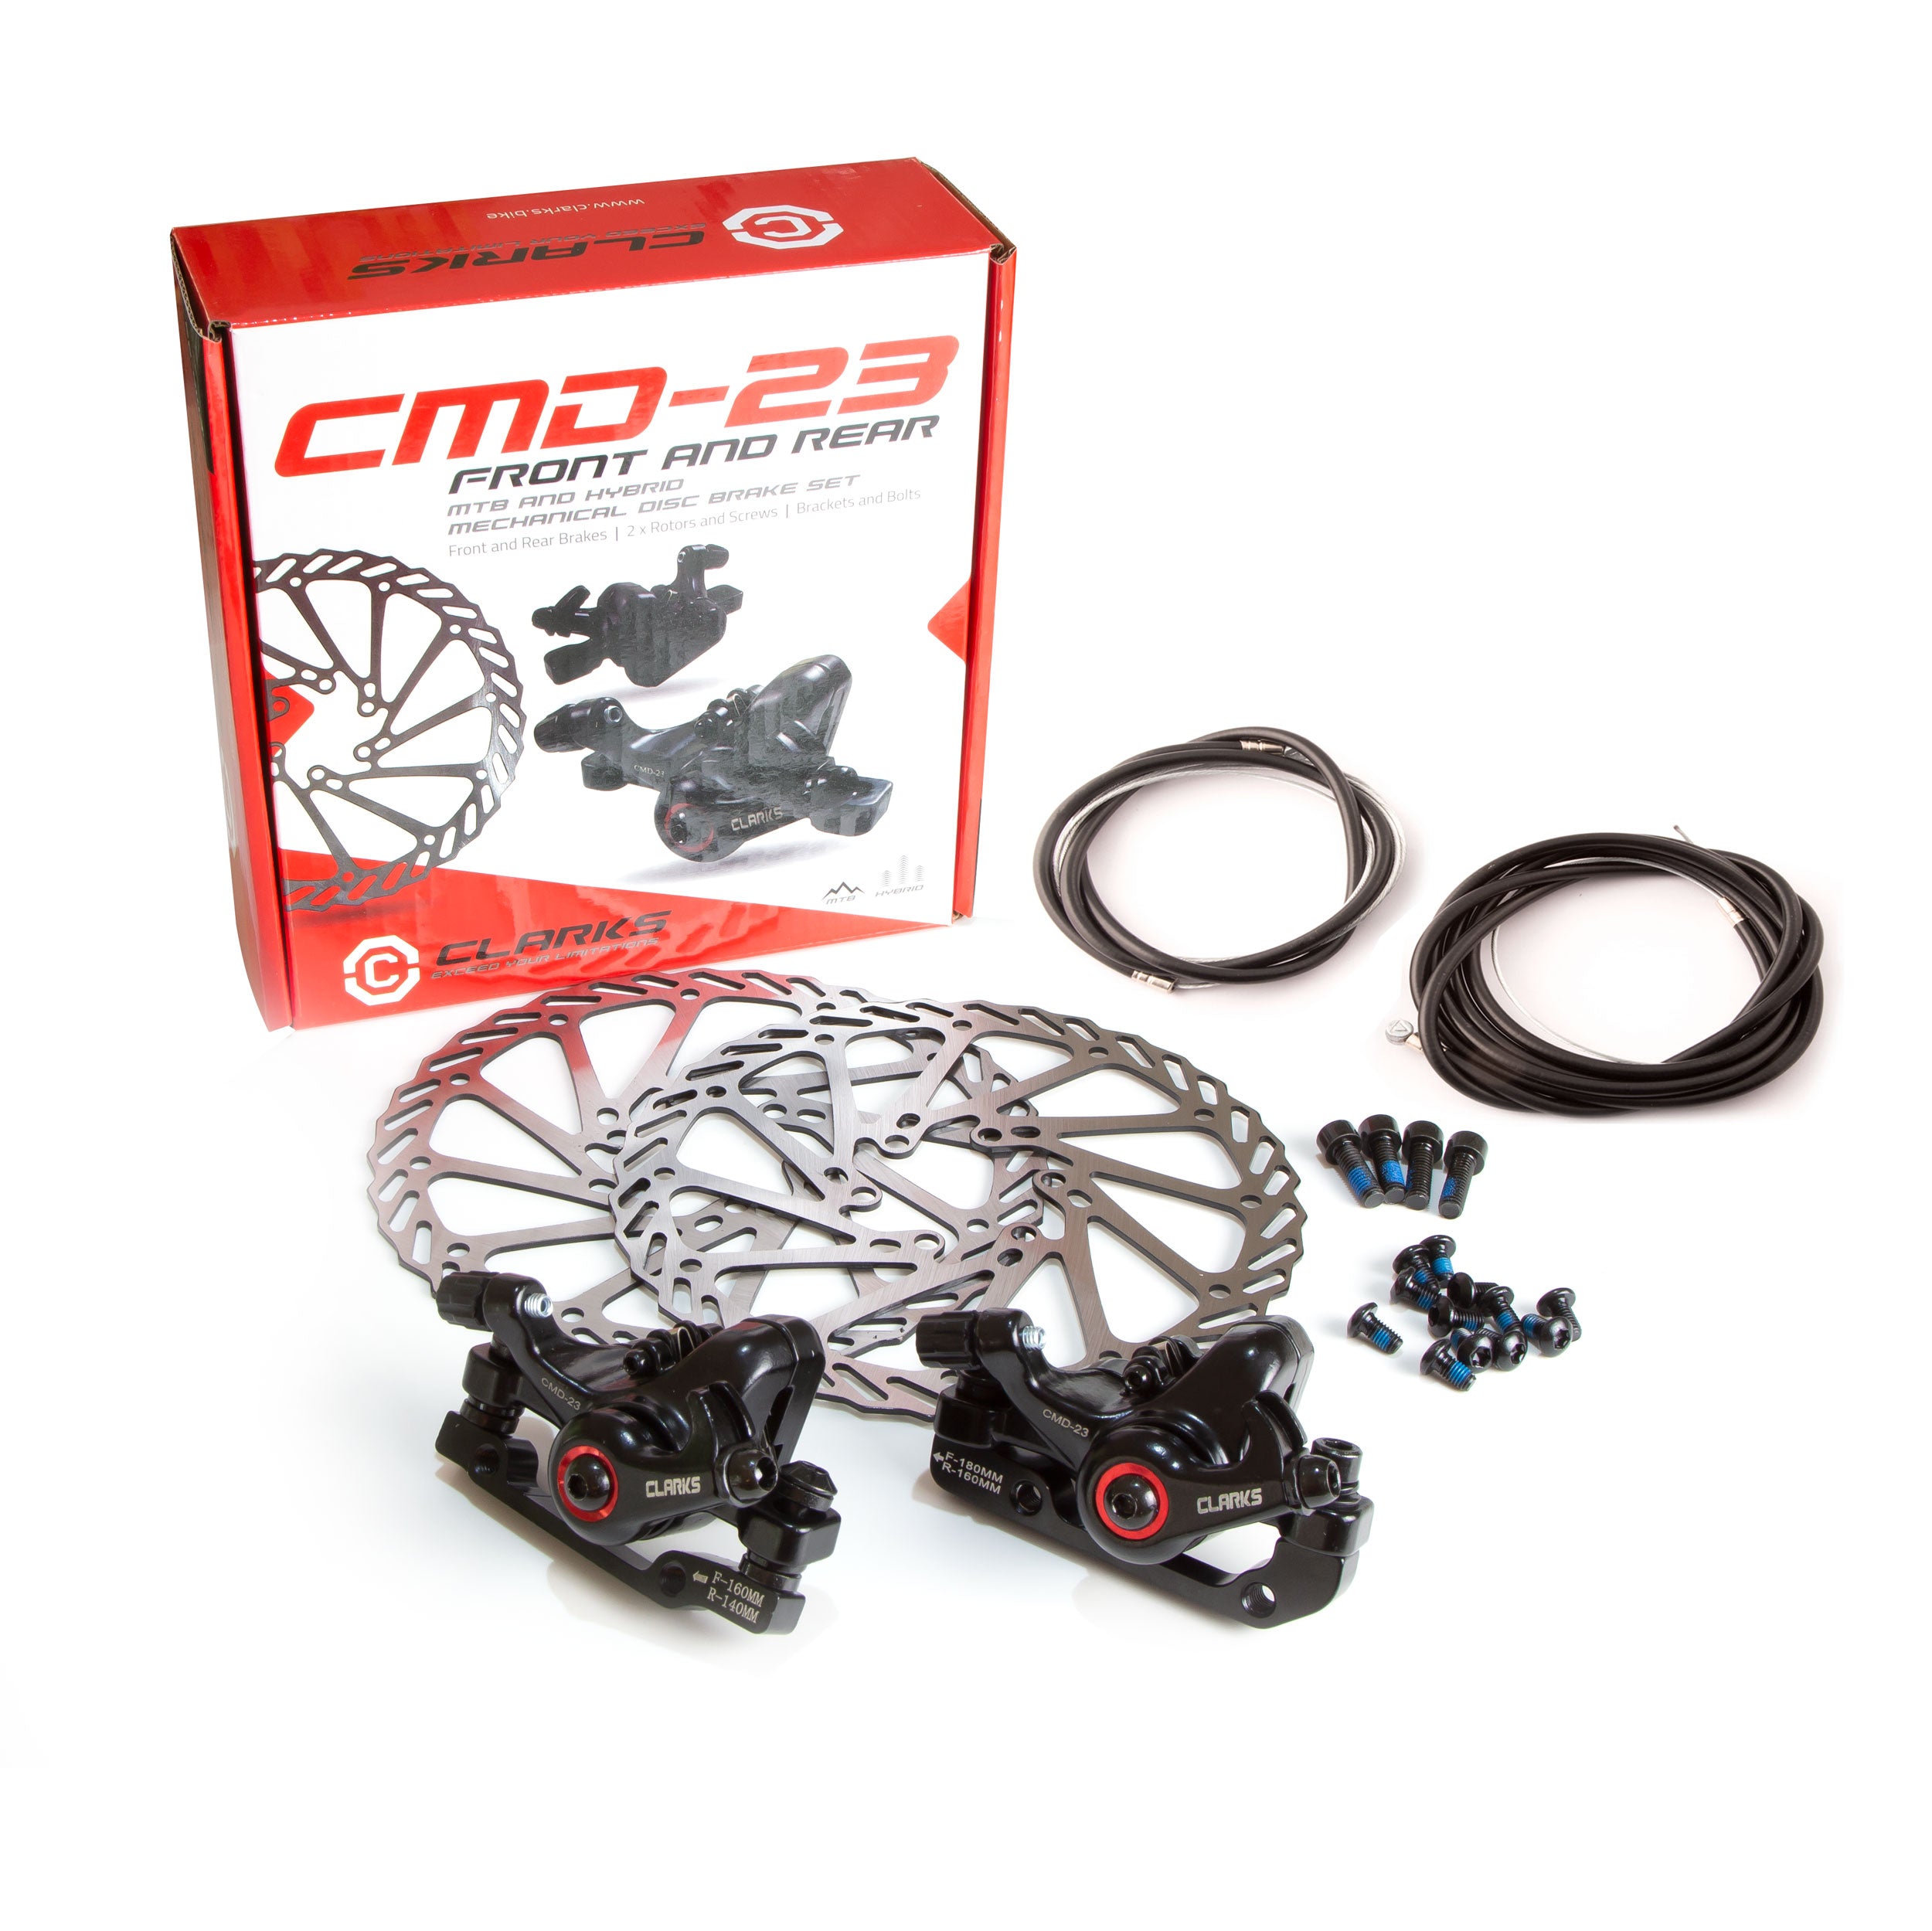 View CMD23 Mechanical Disc Brake Set Cables information